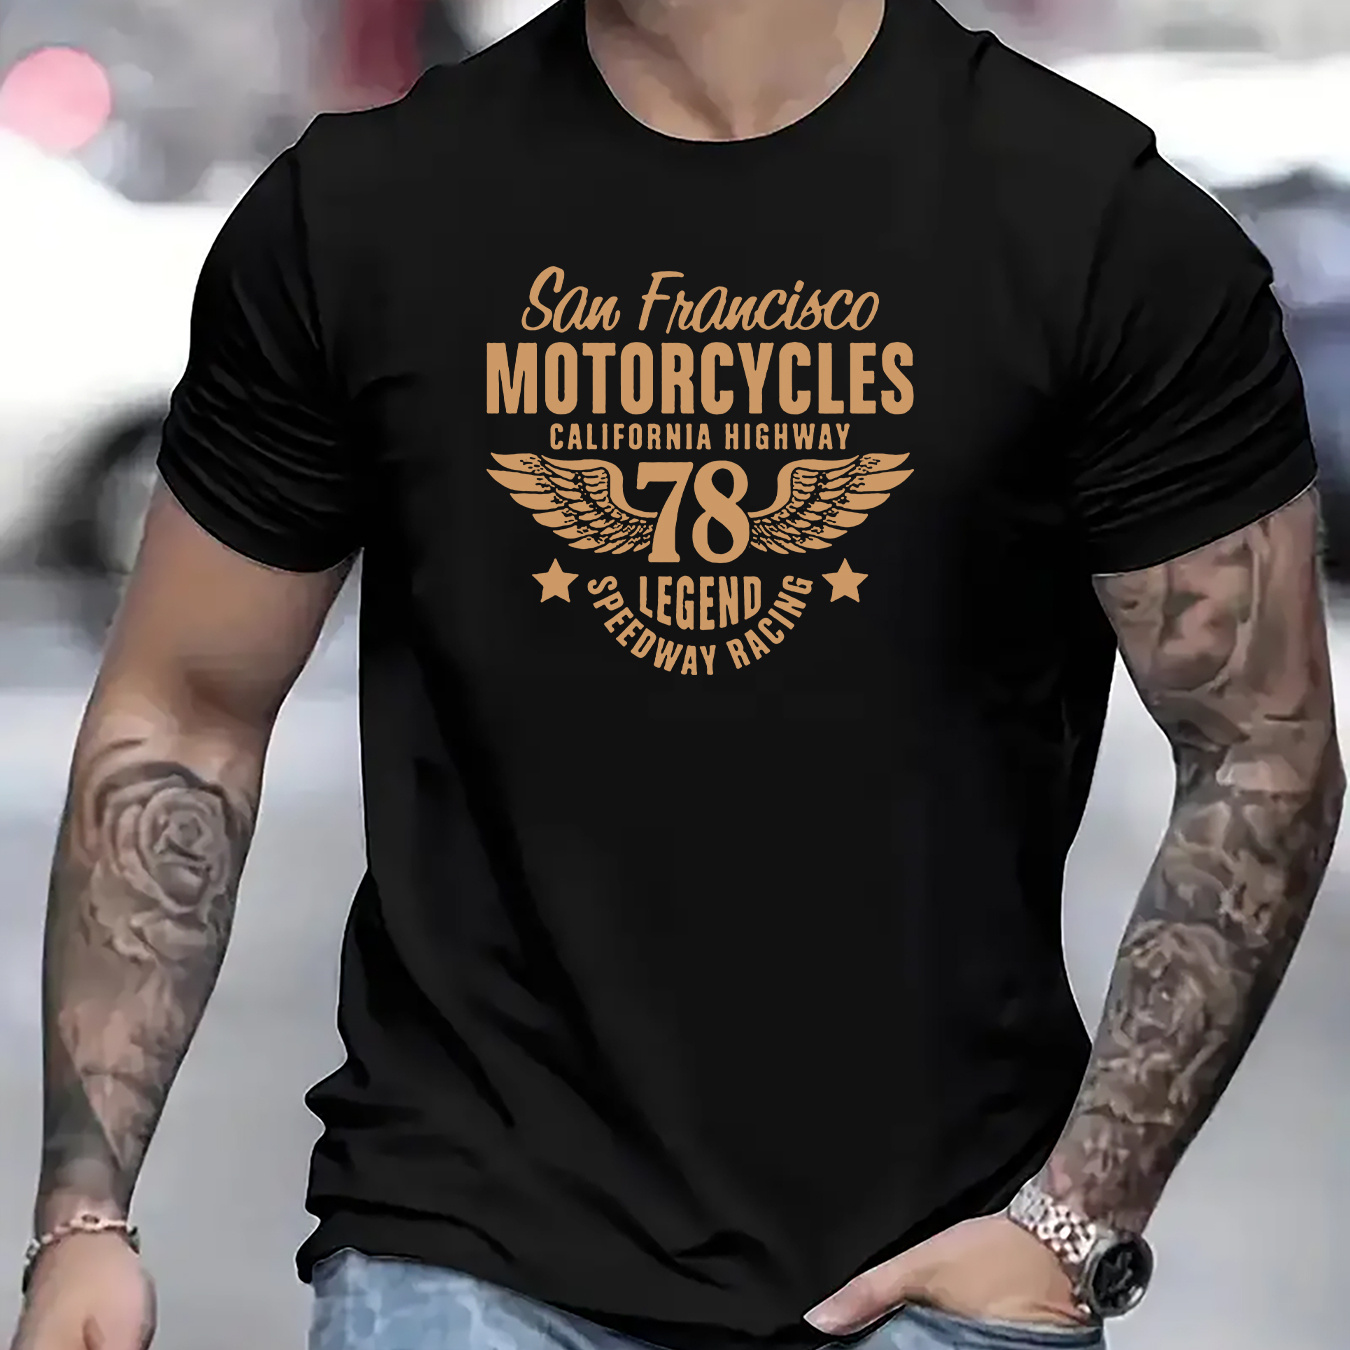 

San Francisco Motorcycles Print T Shirt, Tees For Men, Casual Short Sleeve T-shirt For Summer